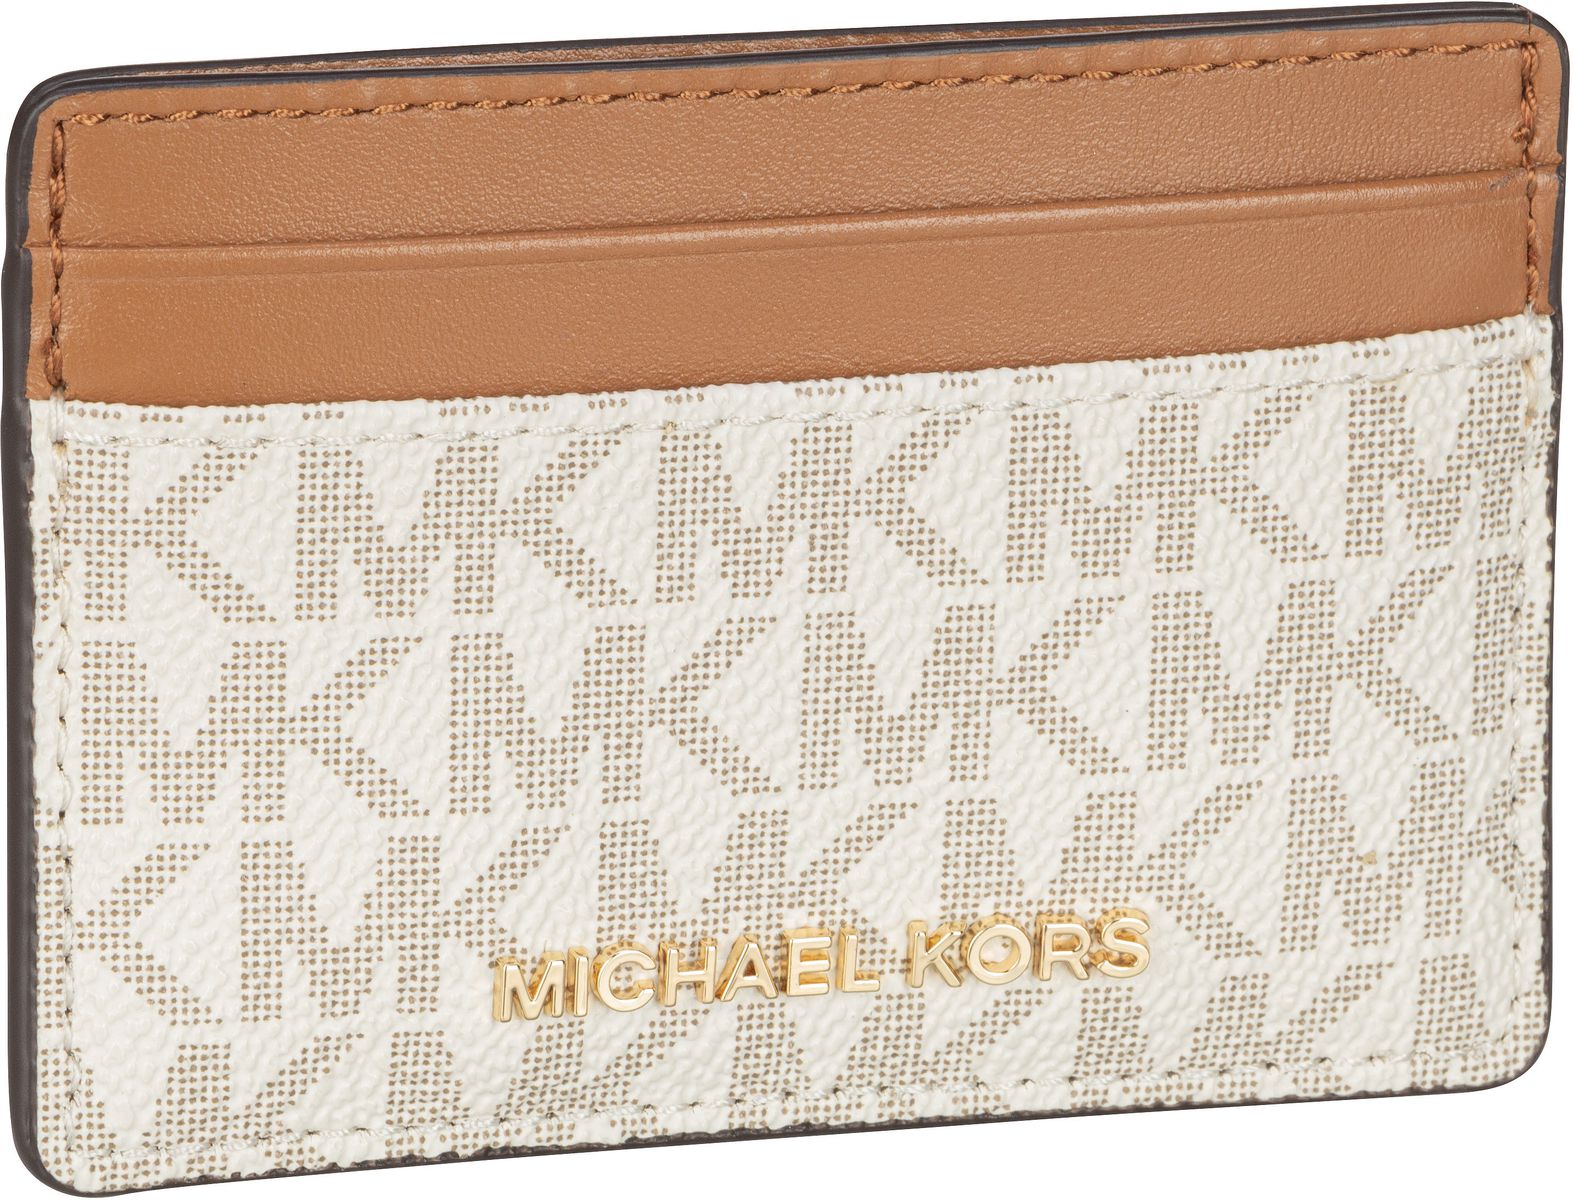 Michael Kors Jet Set Card Holder MK Signature - Vanilla